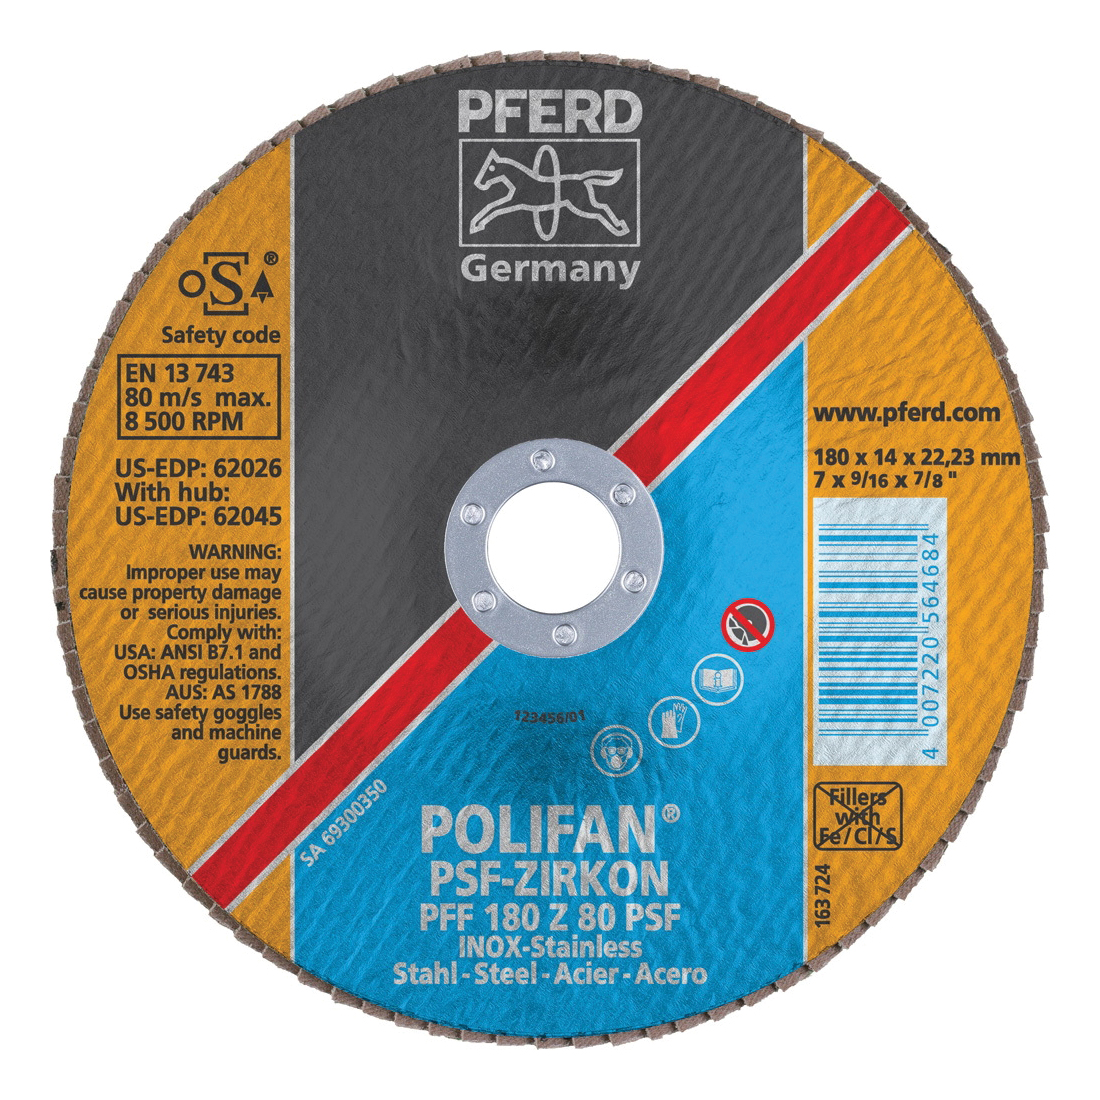 PFERD Polifan® 62026 Universal Line PSF-Z Unthreaded Coated Abrasive Flap Disc, 7 in Dia, 7/8 in Center Hole, 80 Grit, Zirconia Alumina Abrasive, Type 27 Flat Disc